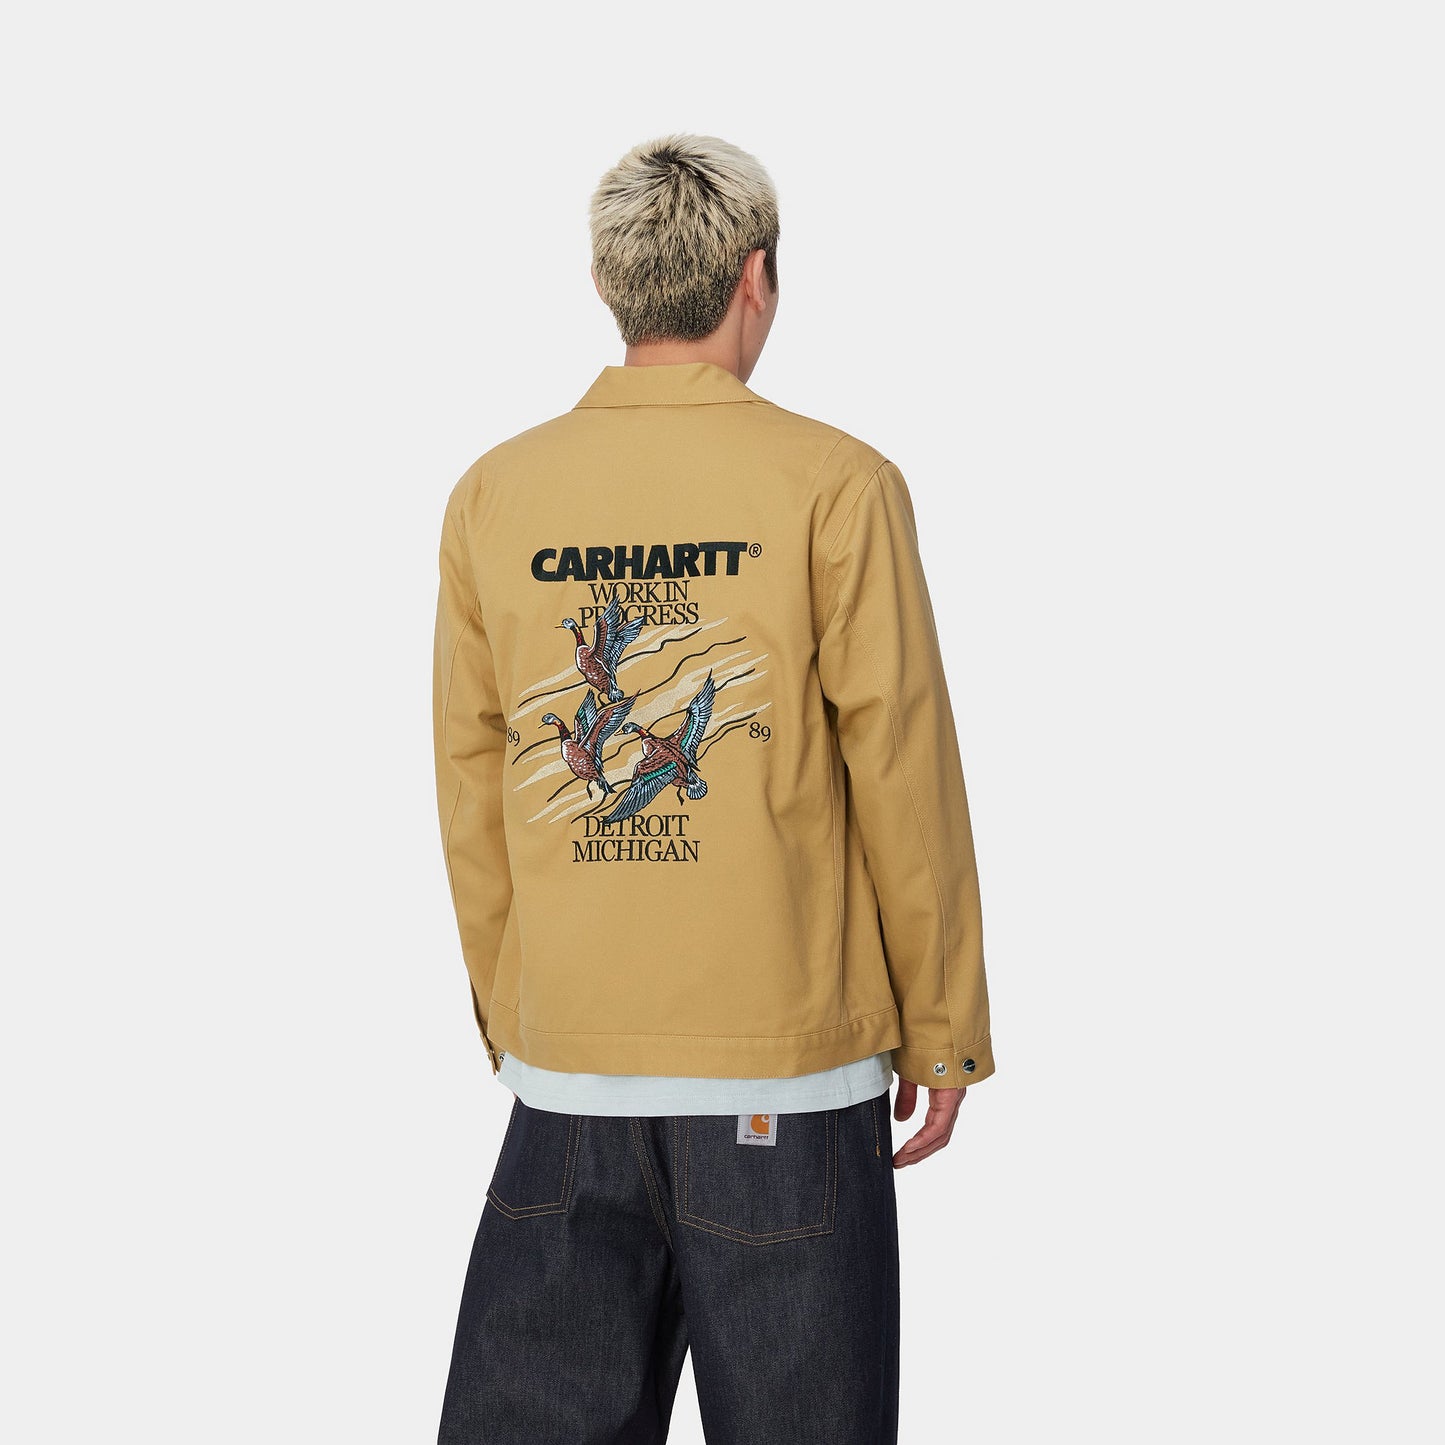 Carhartt - Ducks Cotton Twill Jacket Bourbon